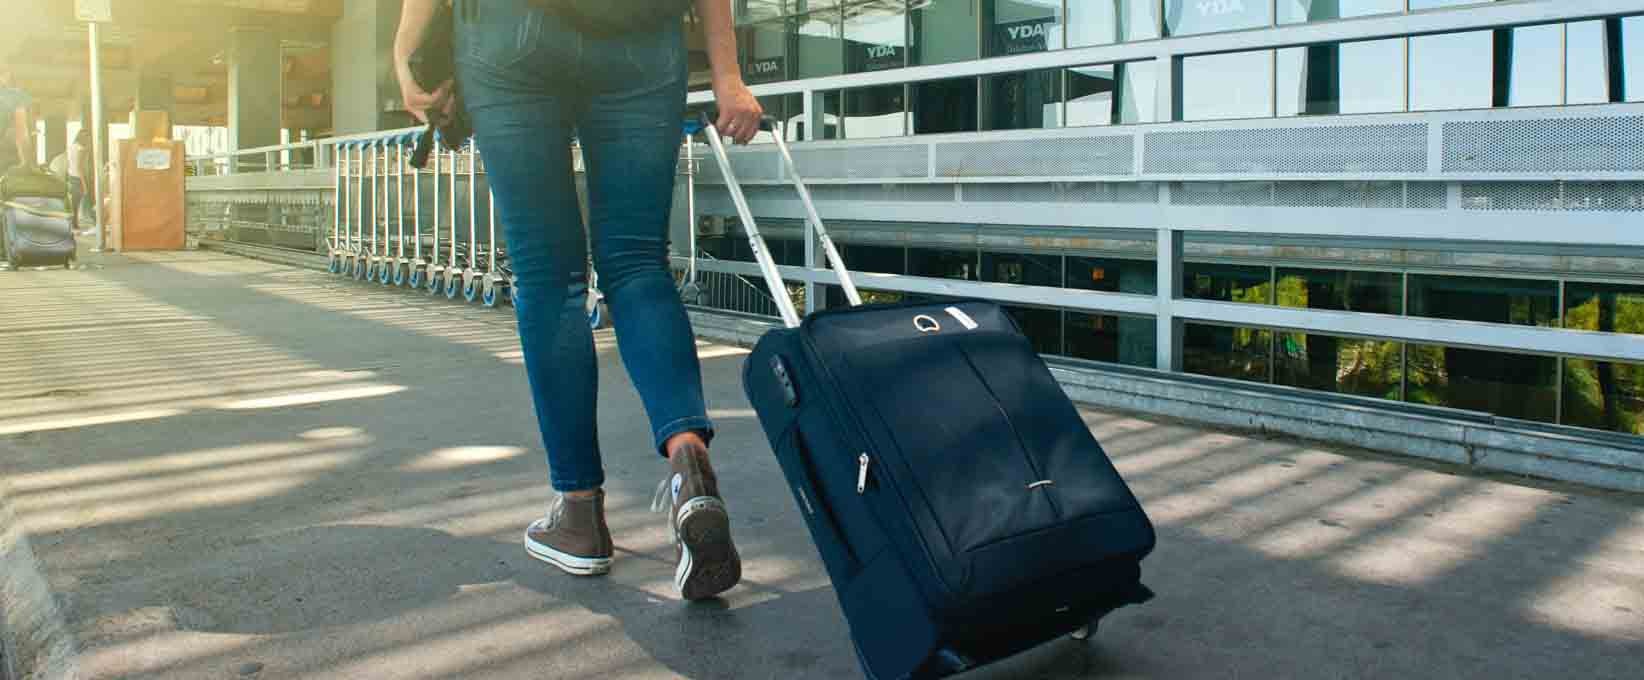 Woman with luggage bag